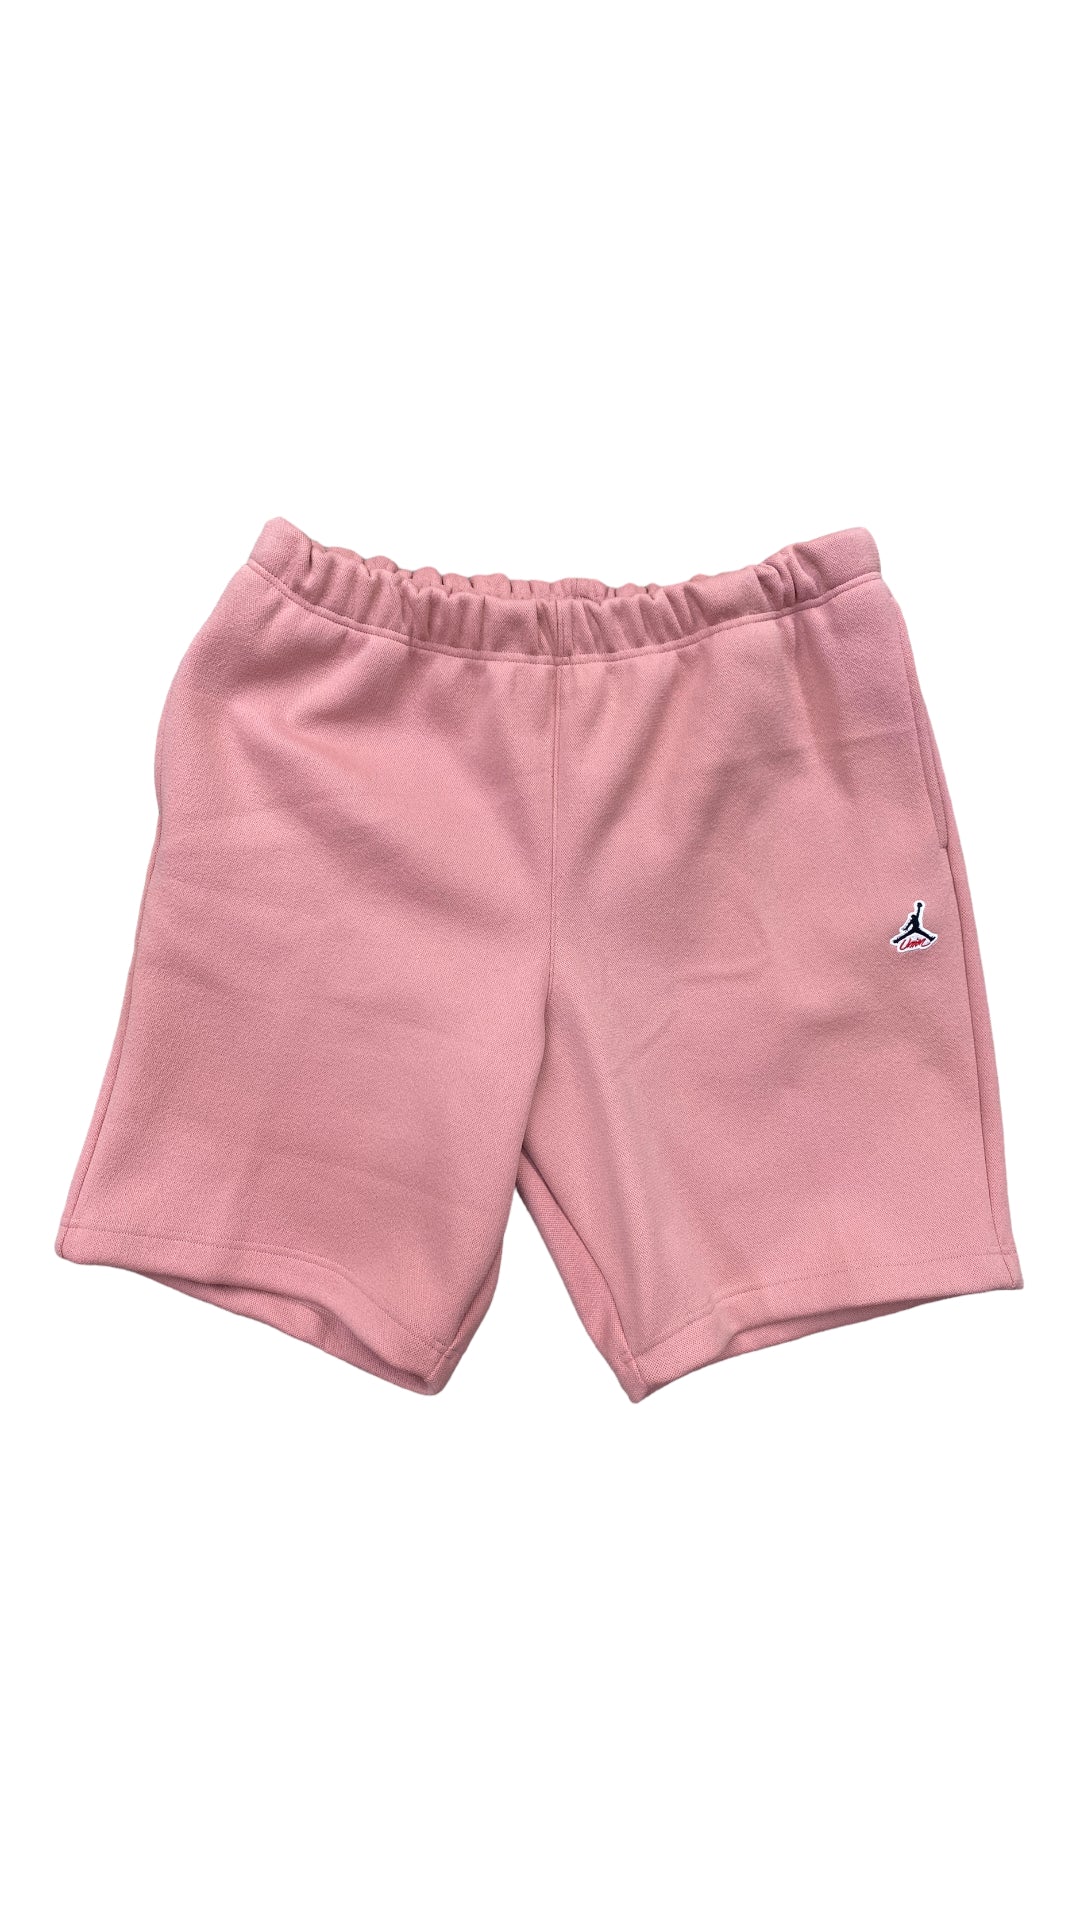 Jordan X Union “Salmon” Shorts XL